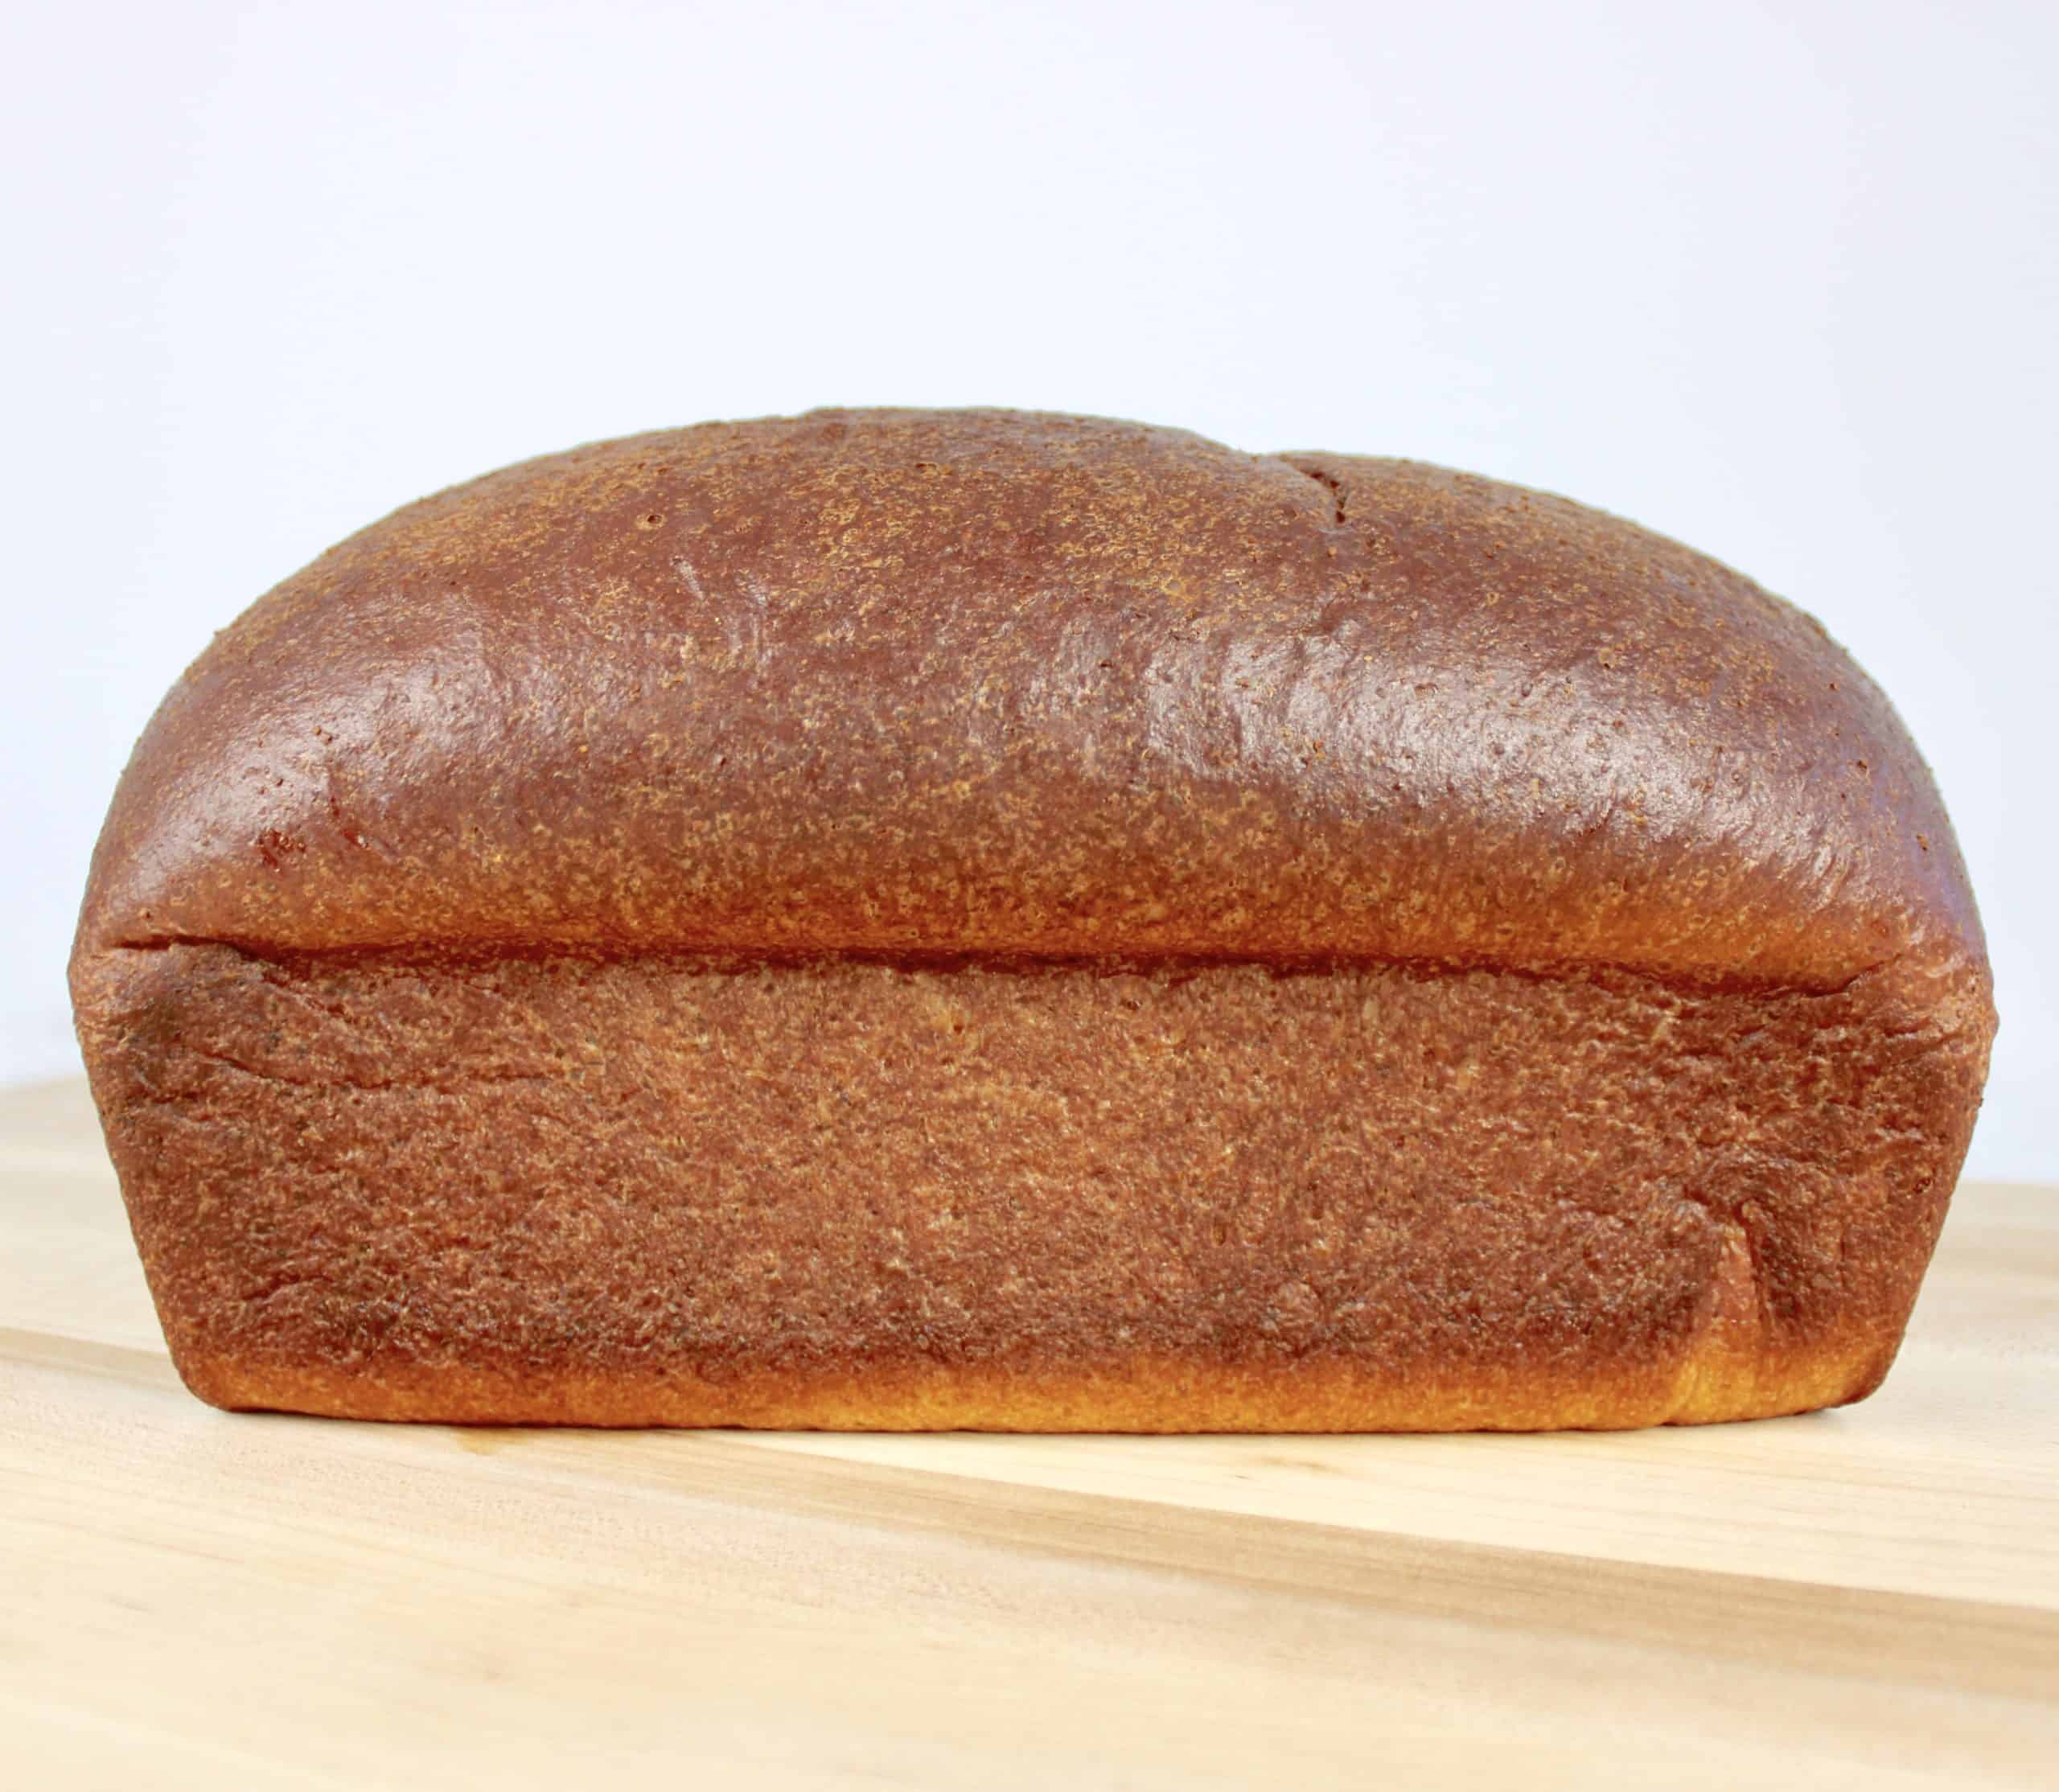 baked keto bread loaf on cutting board